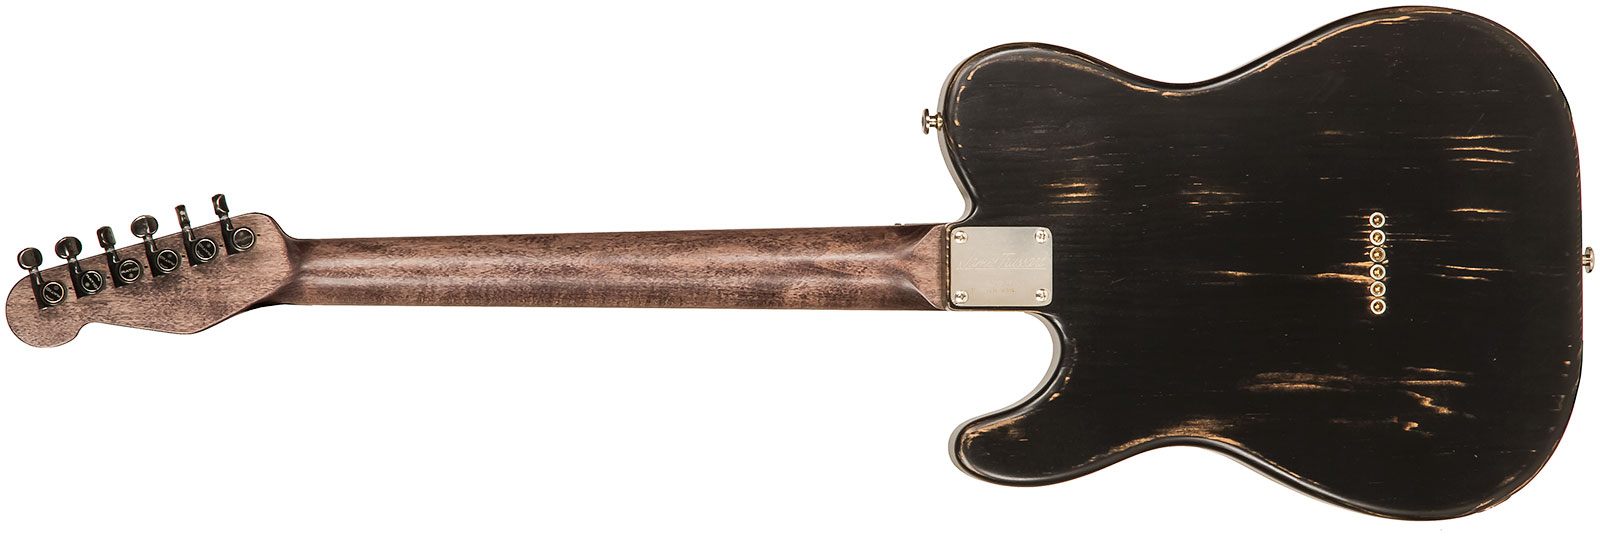 James Trussart Steeltopcaster Sh Ht Eb #21135 - Antique Silver Paisley - Televorm elektrische gitaar - Variation 1